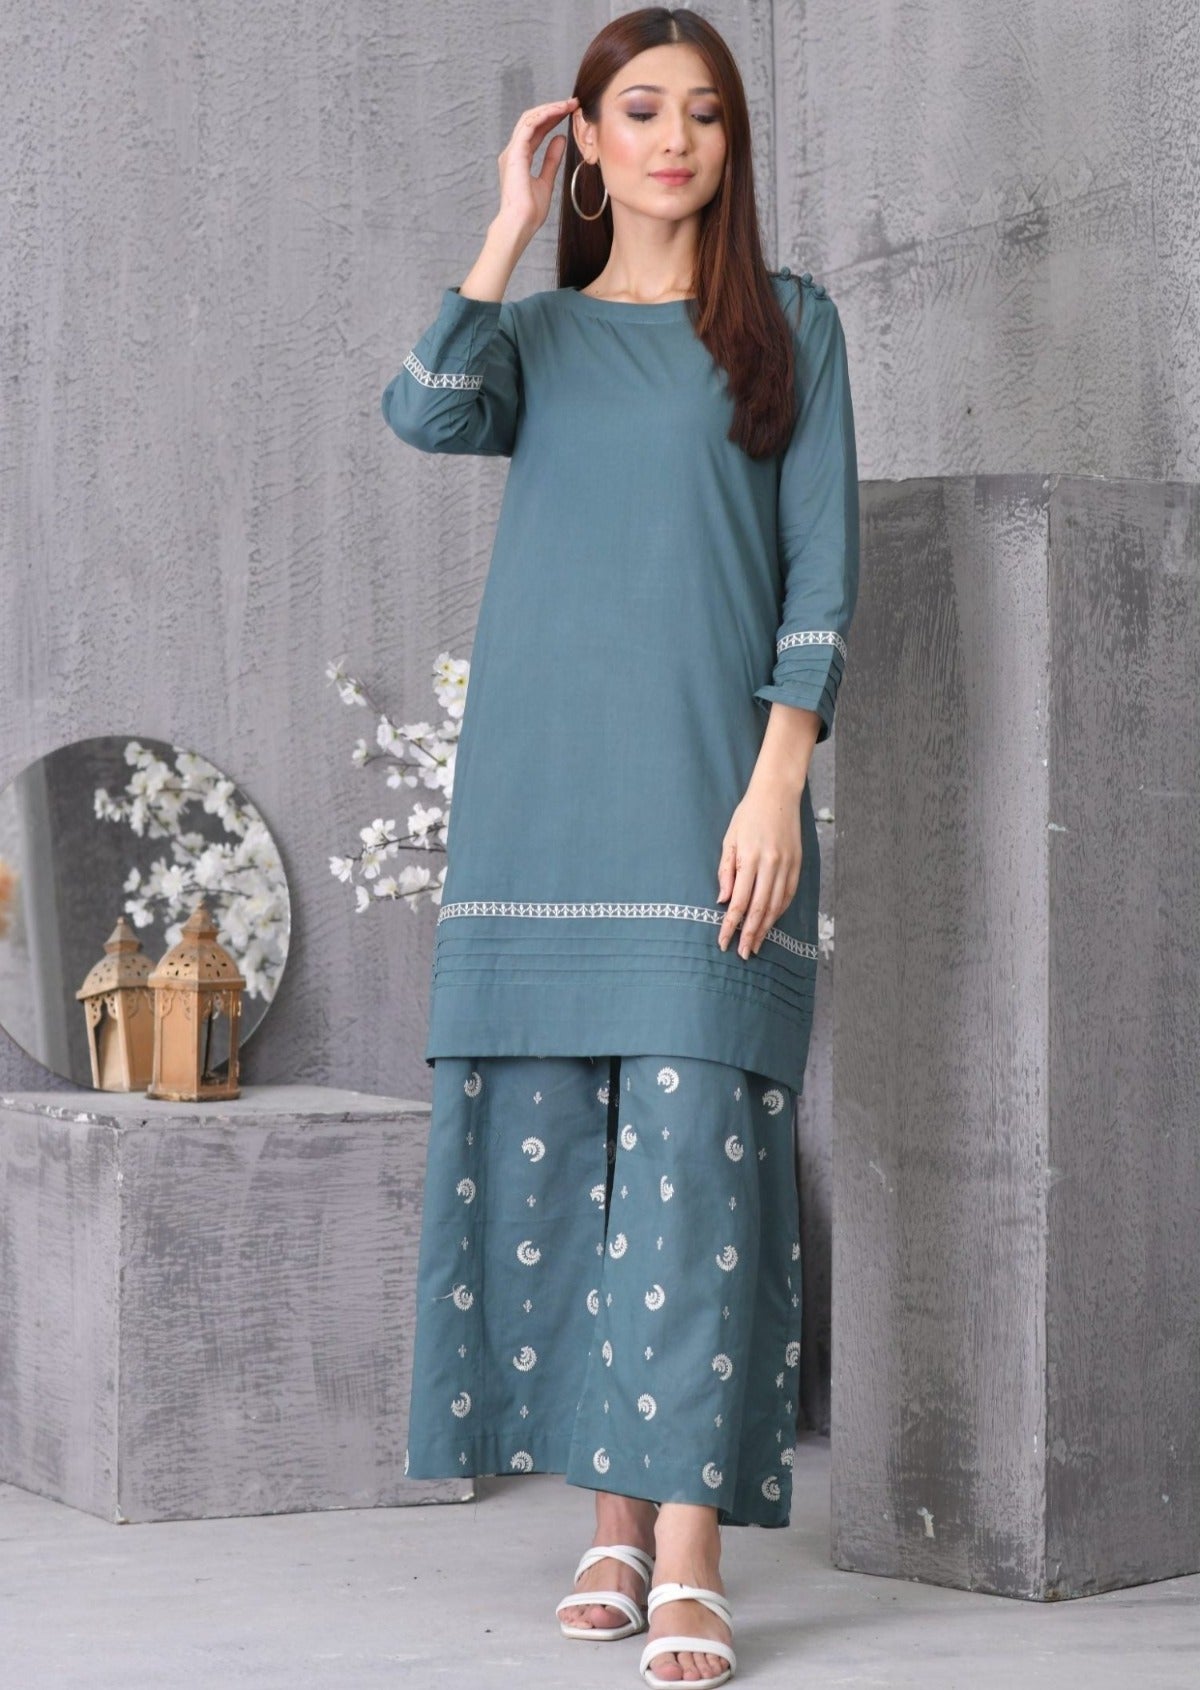 Latest Pakistani Fashion 2016 Light Blue Formal Dress